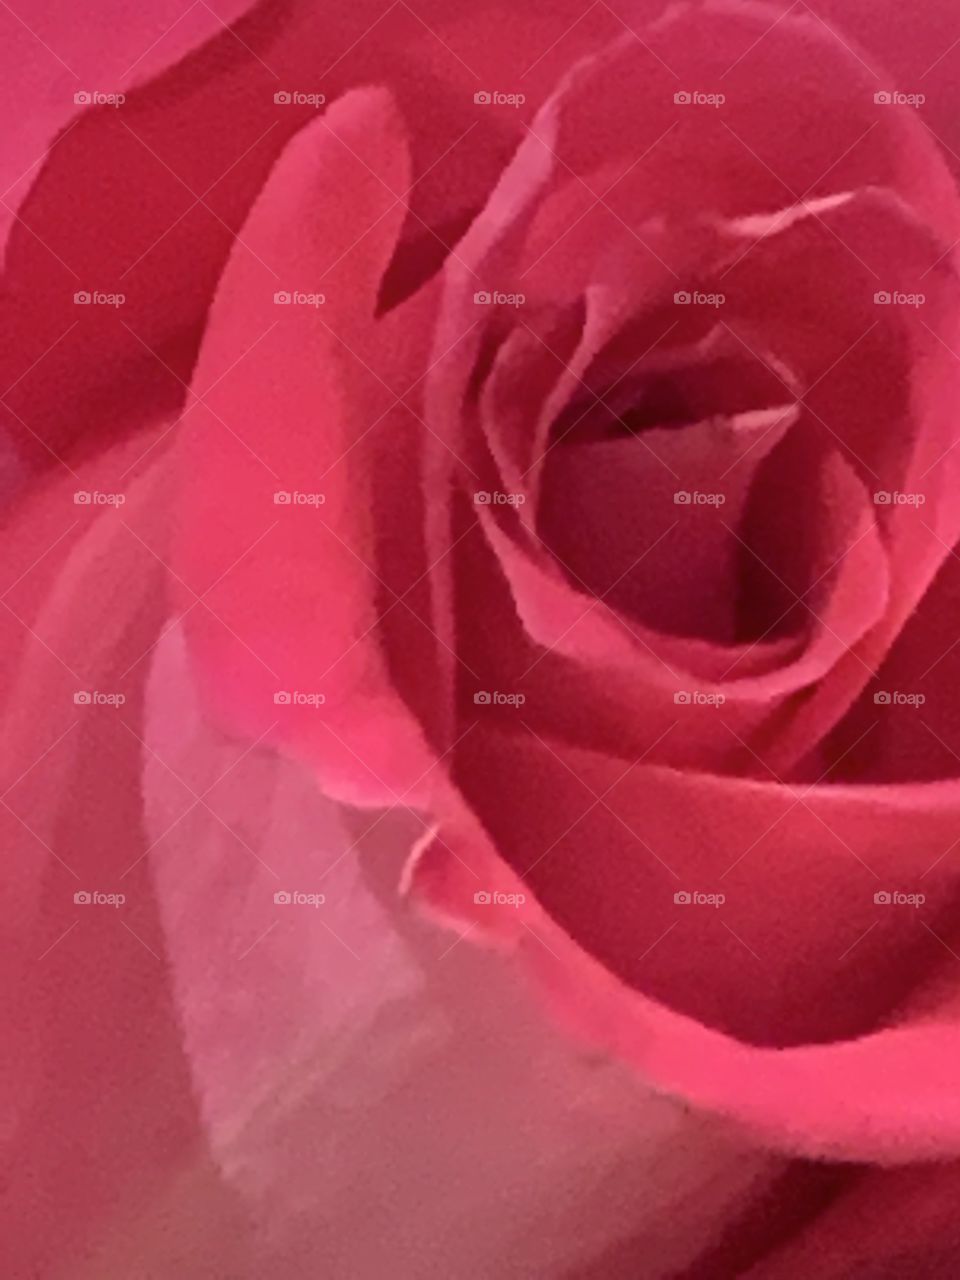 Light In A Rose